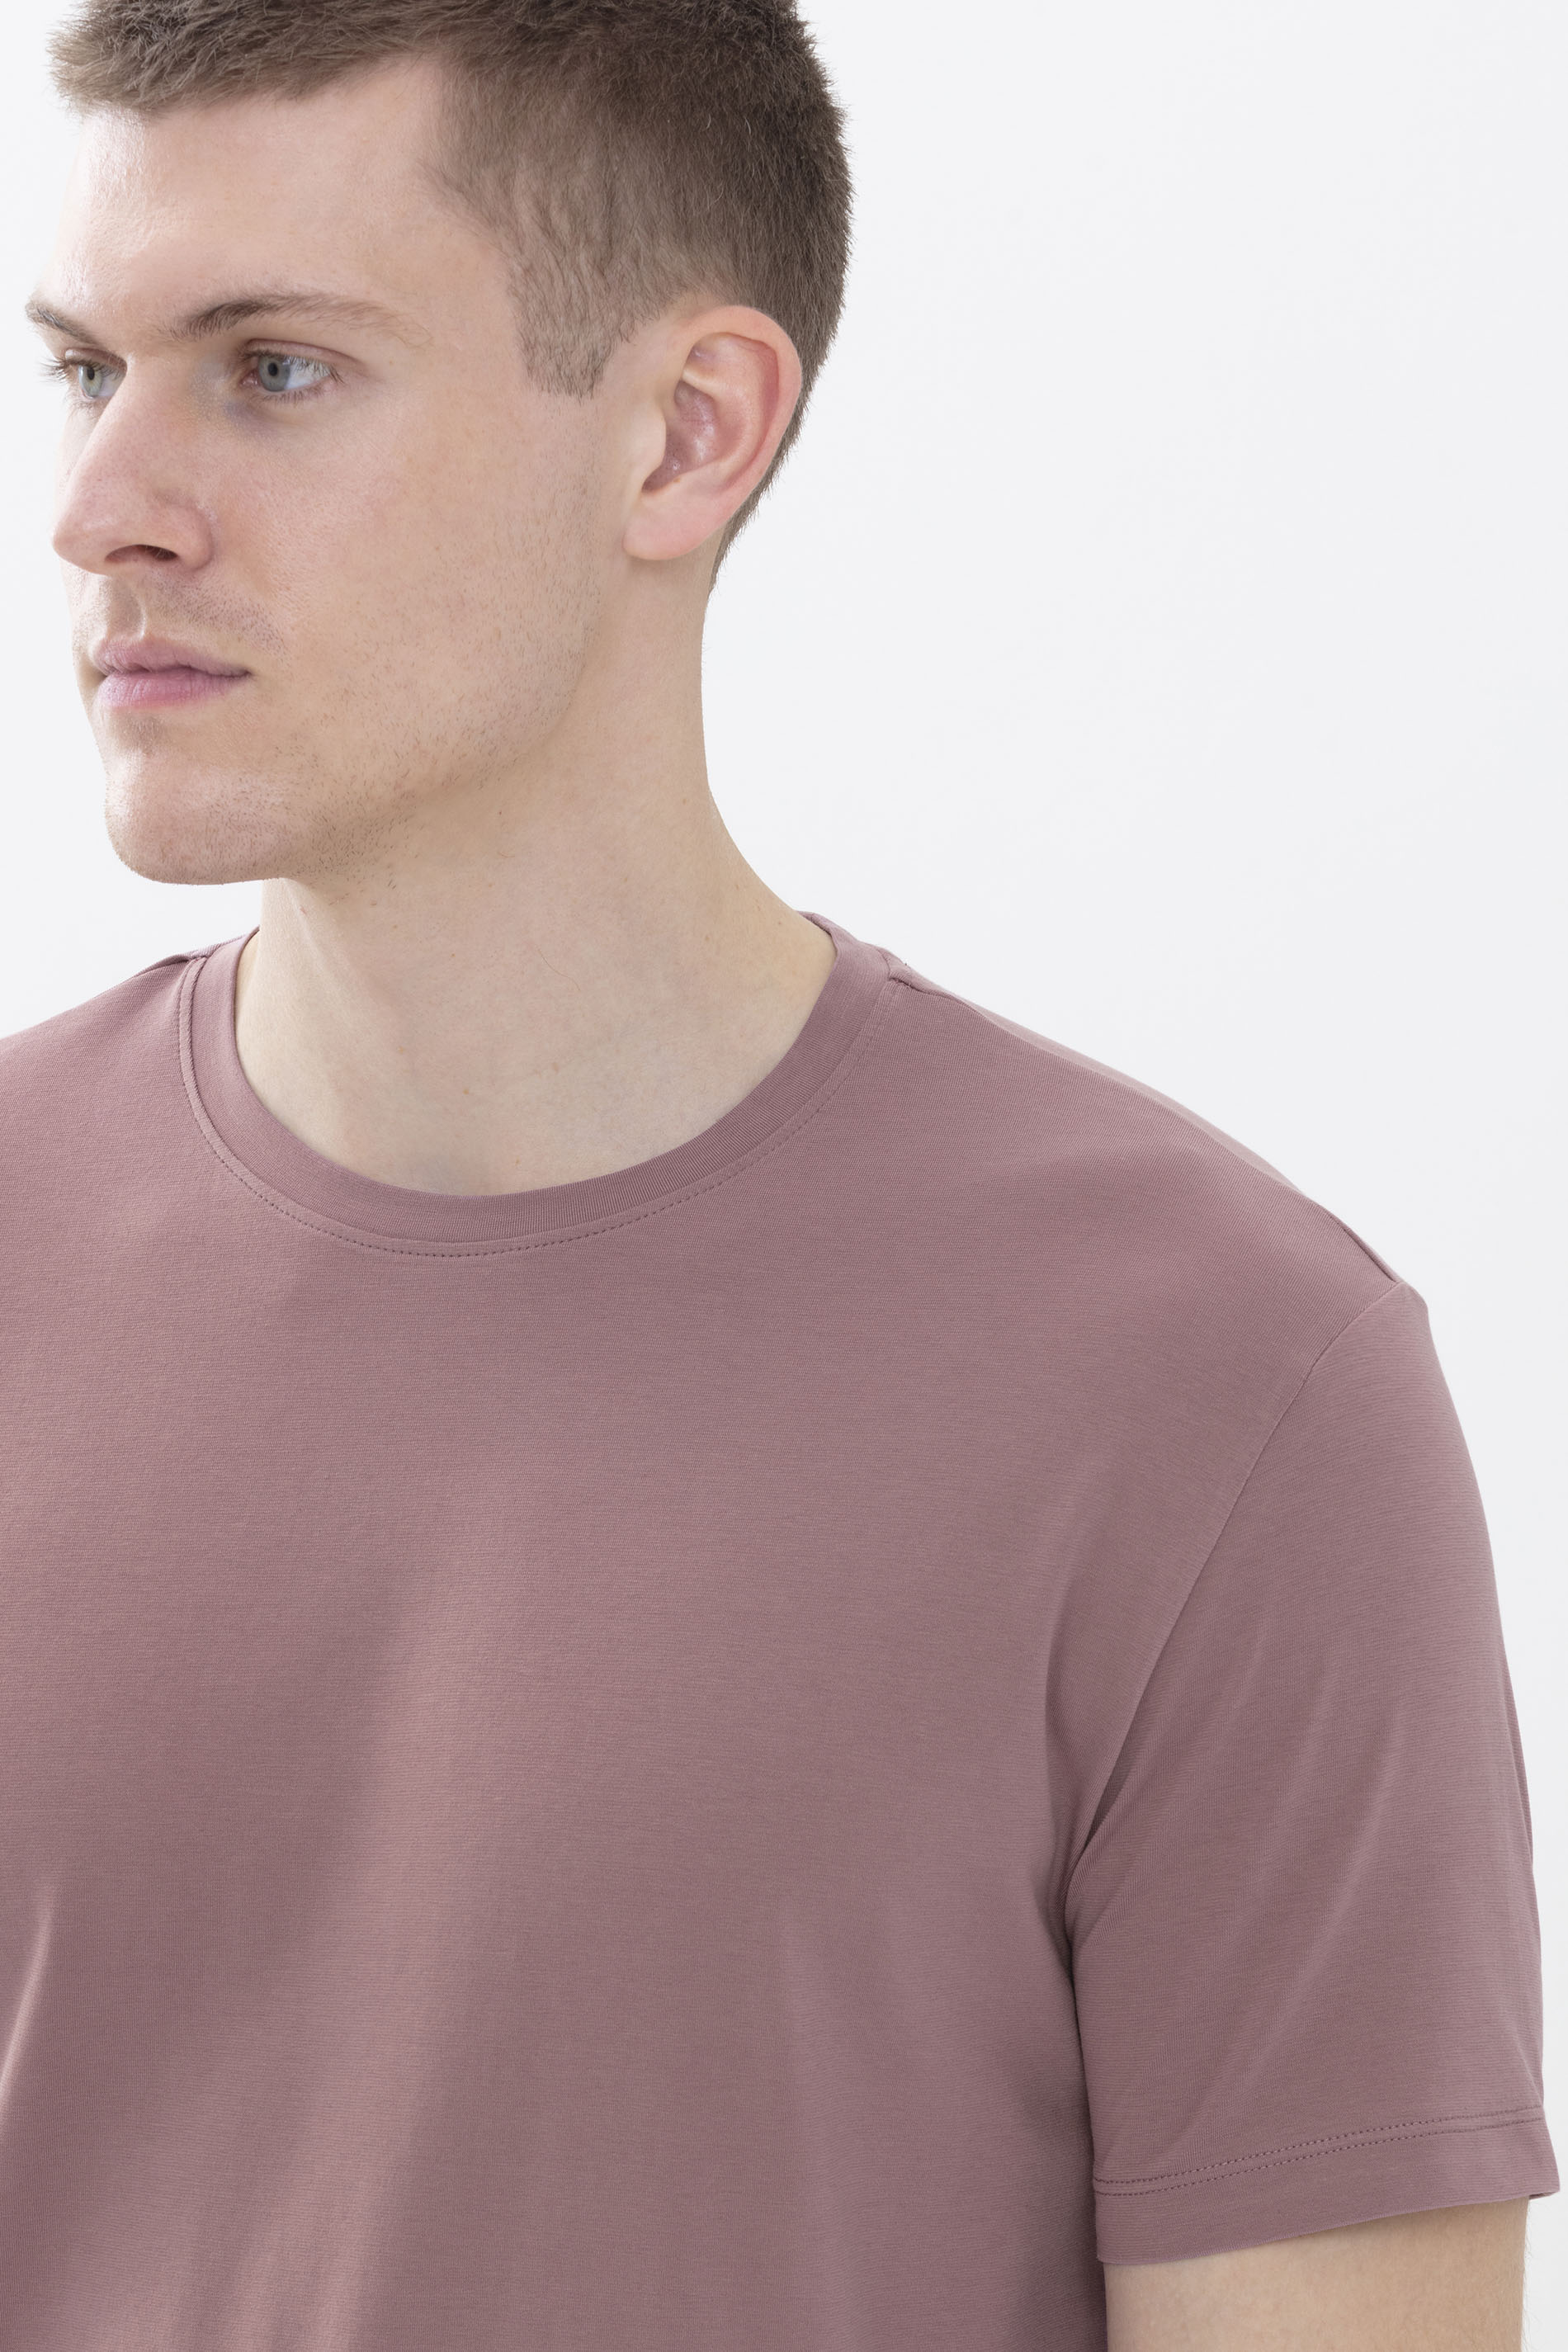 T-Shirt Blush Powder Serie Relax Detailansicht 01 | mey®